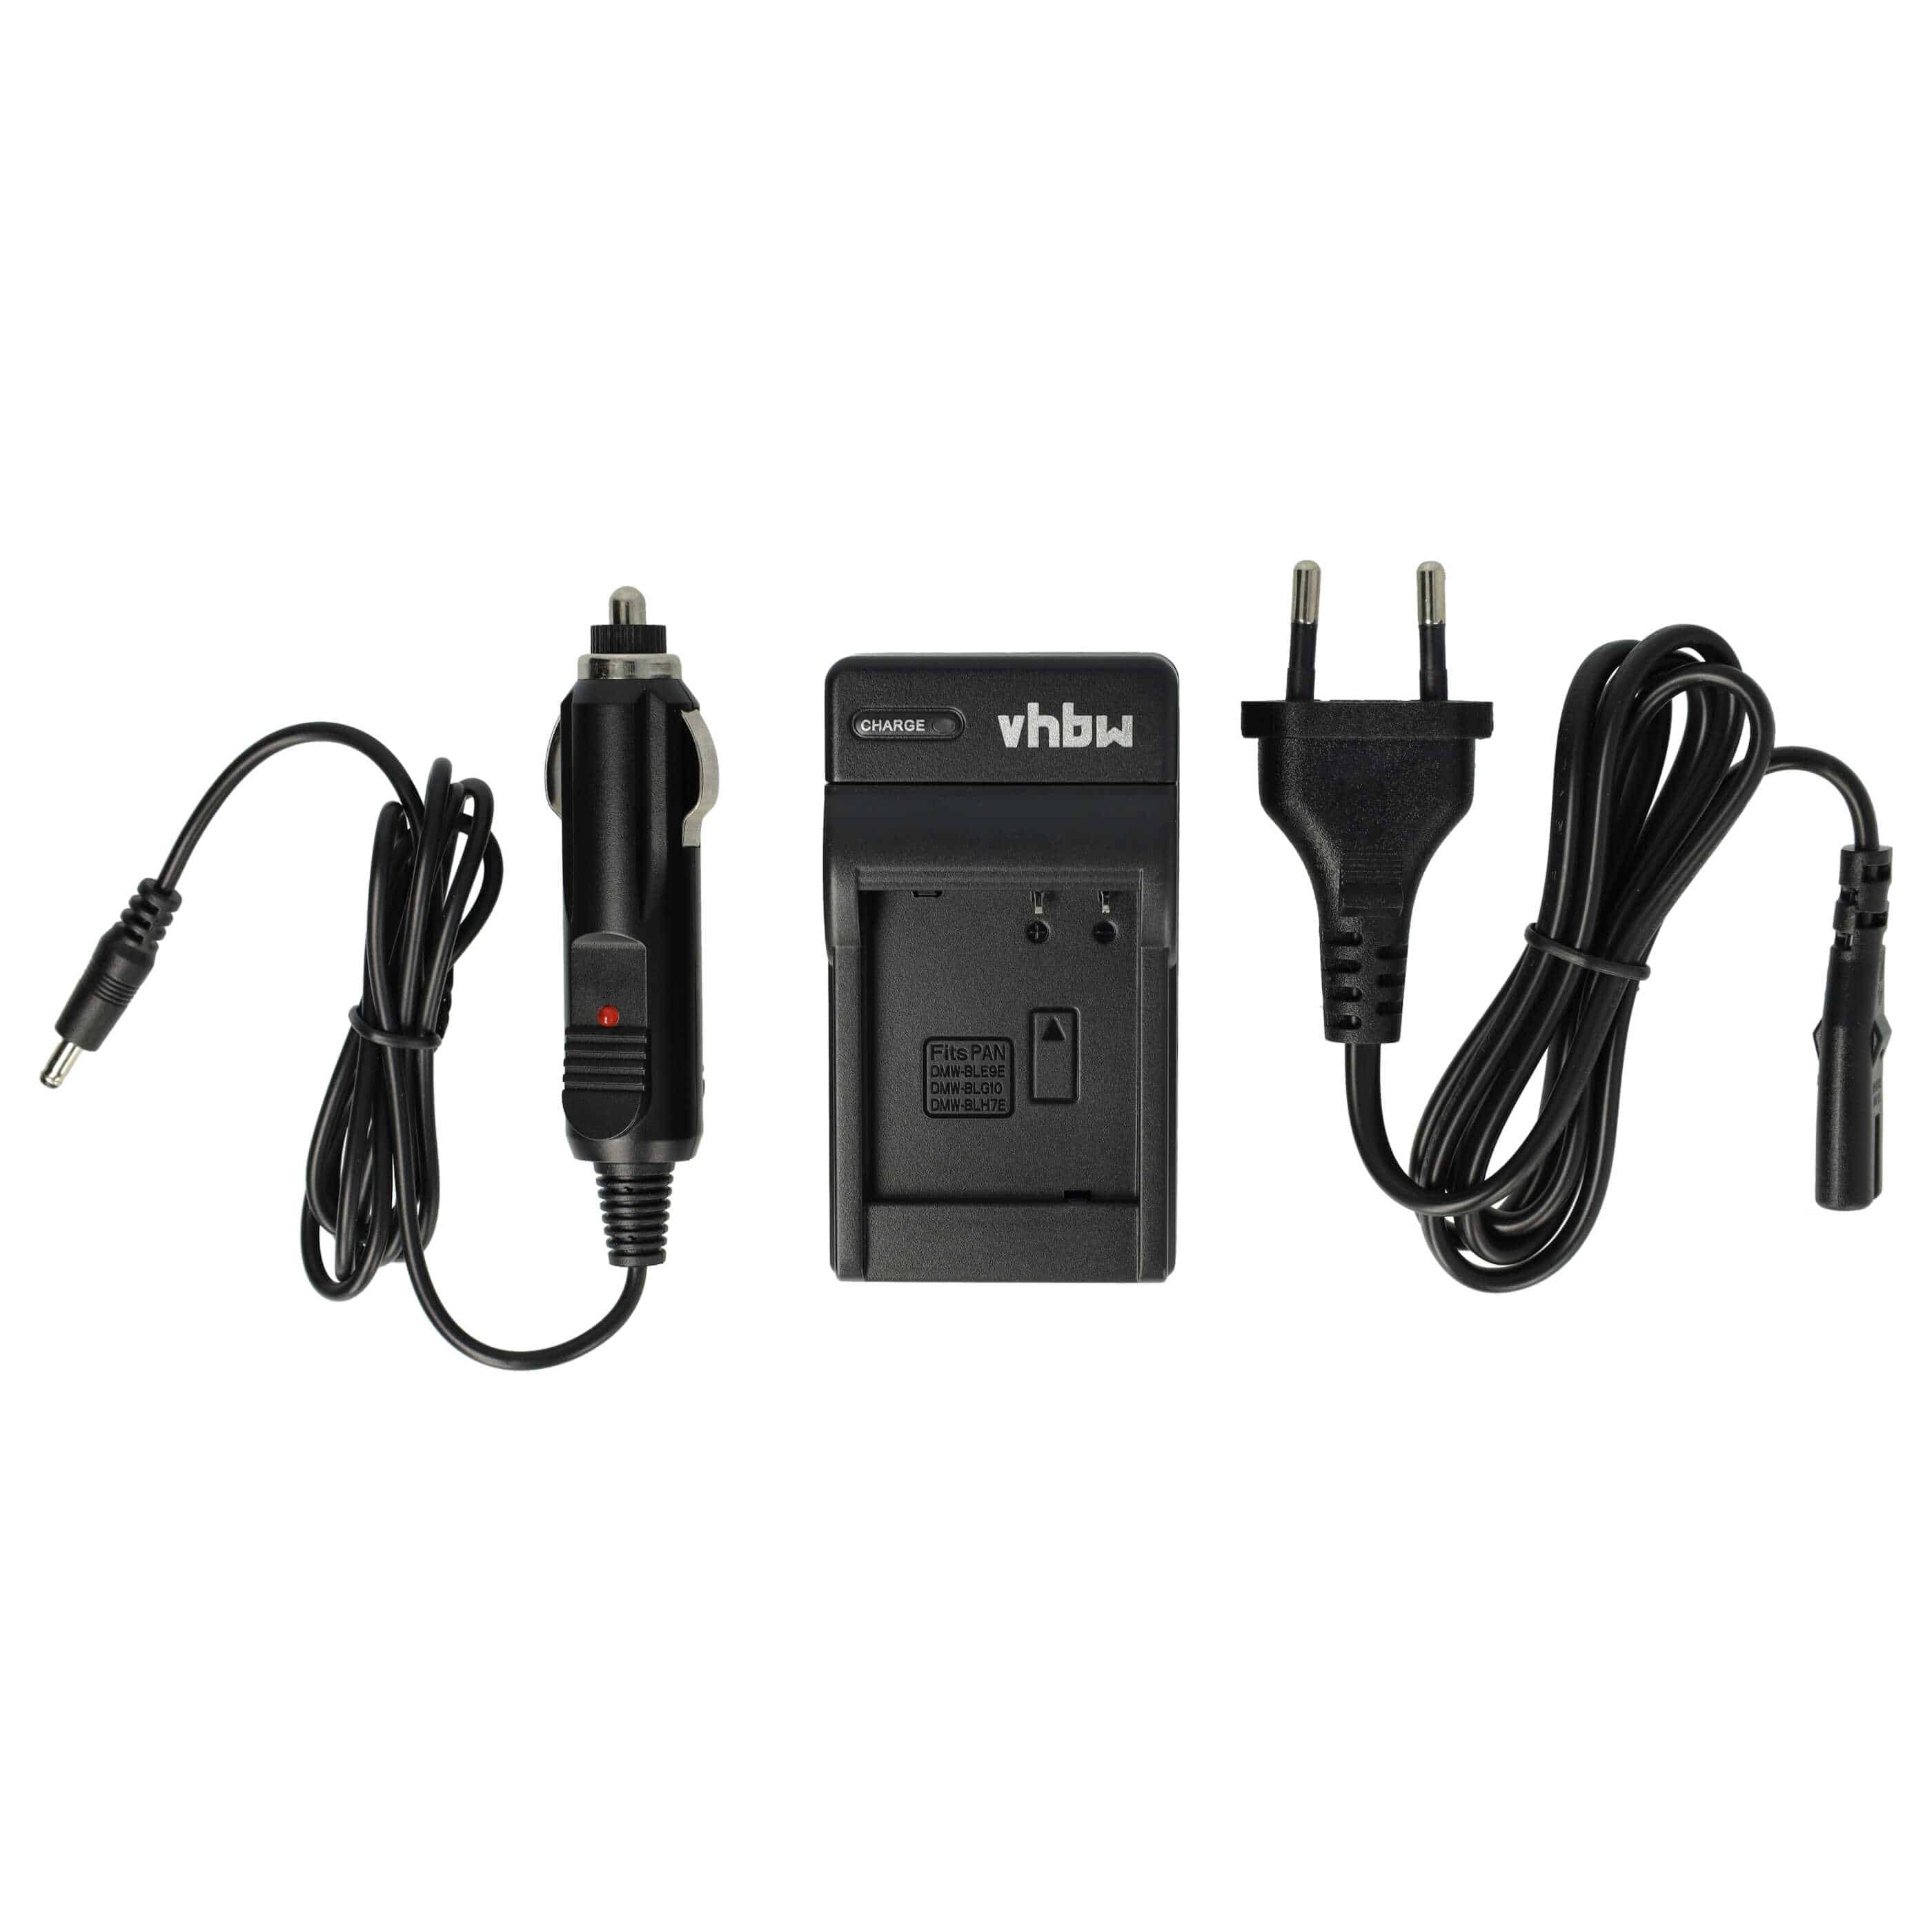 Ładowarka do aparatu Lumix DMC-TZ101 i innych - ładowarka akumulatora 0,6 A, 8,4 V